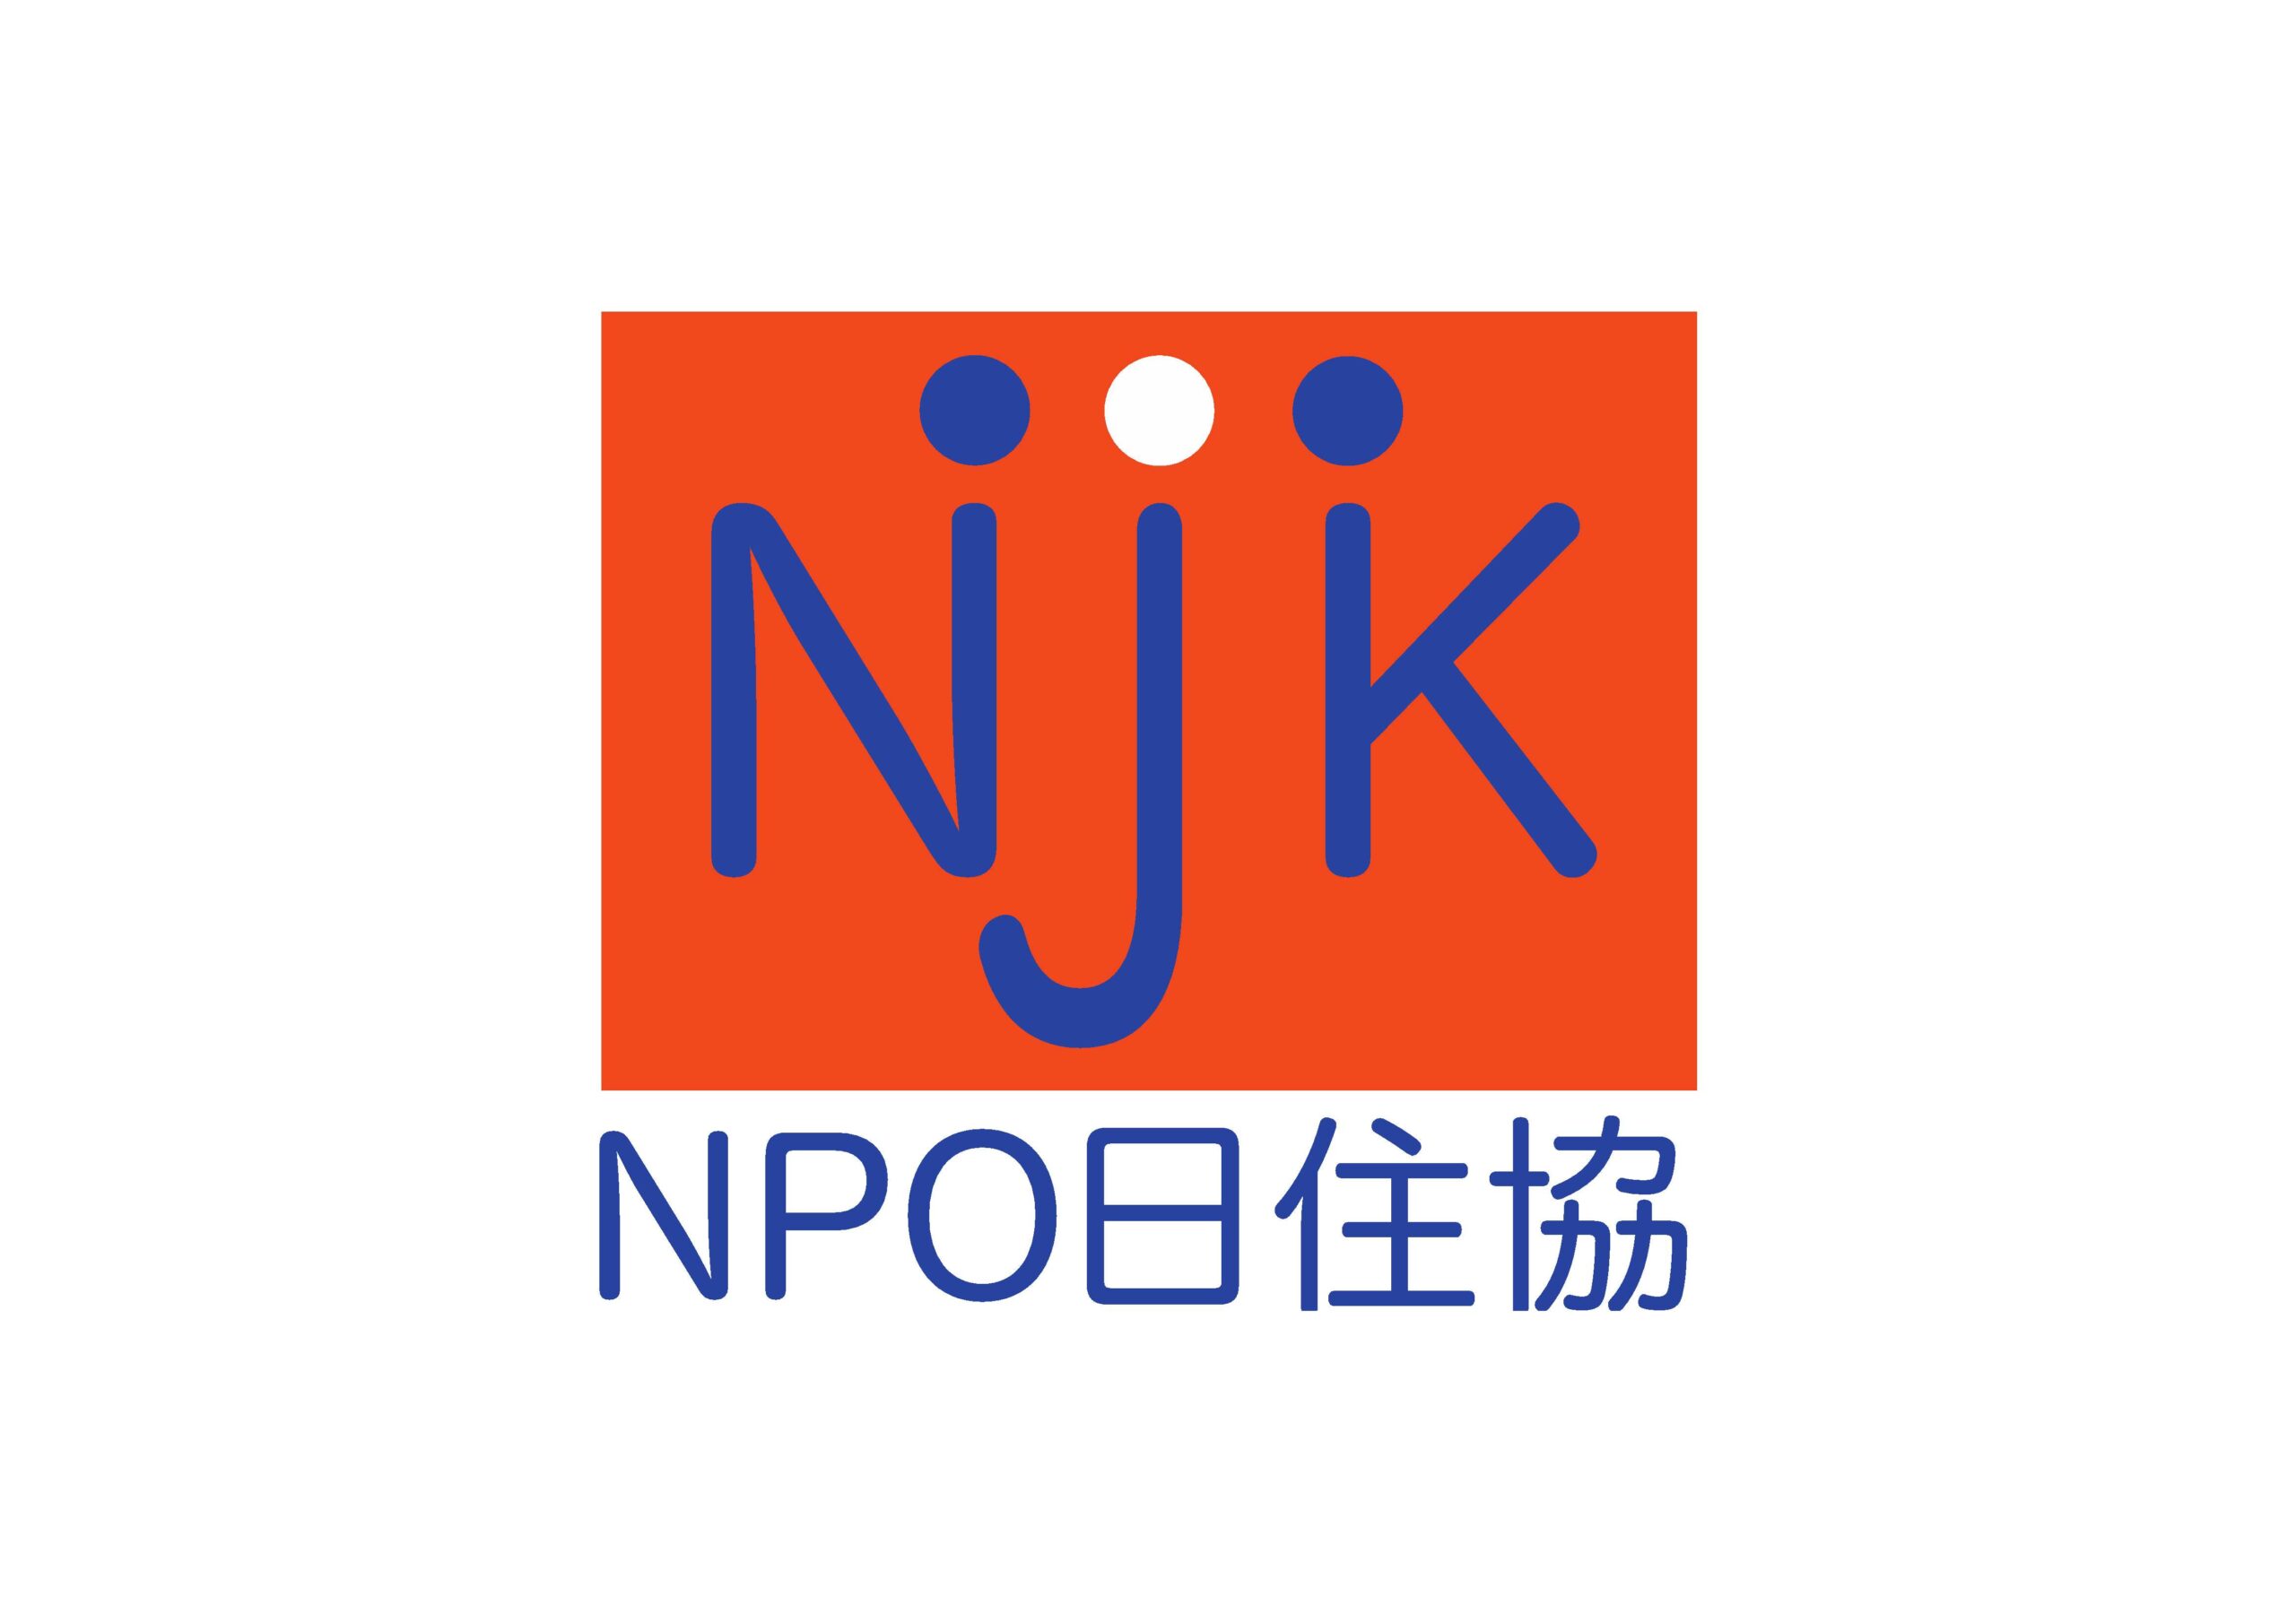 NPO 日本住宅管理組合協議会